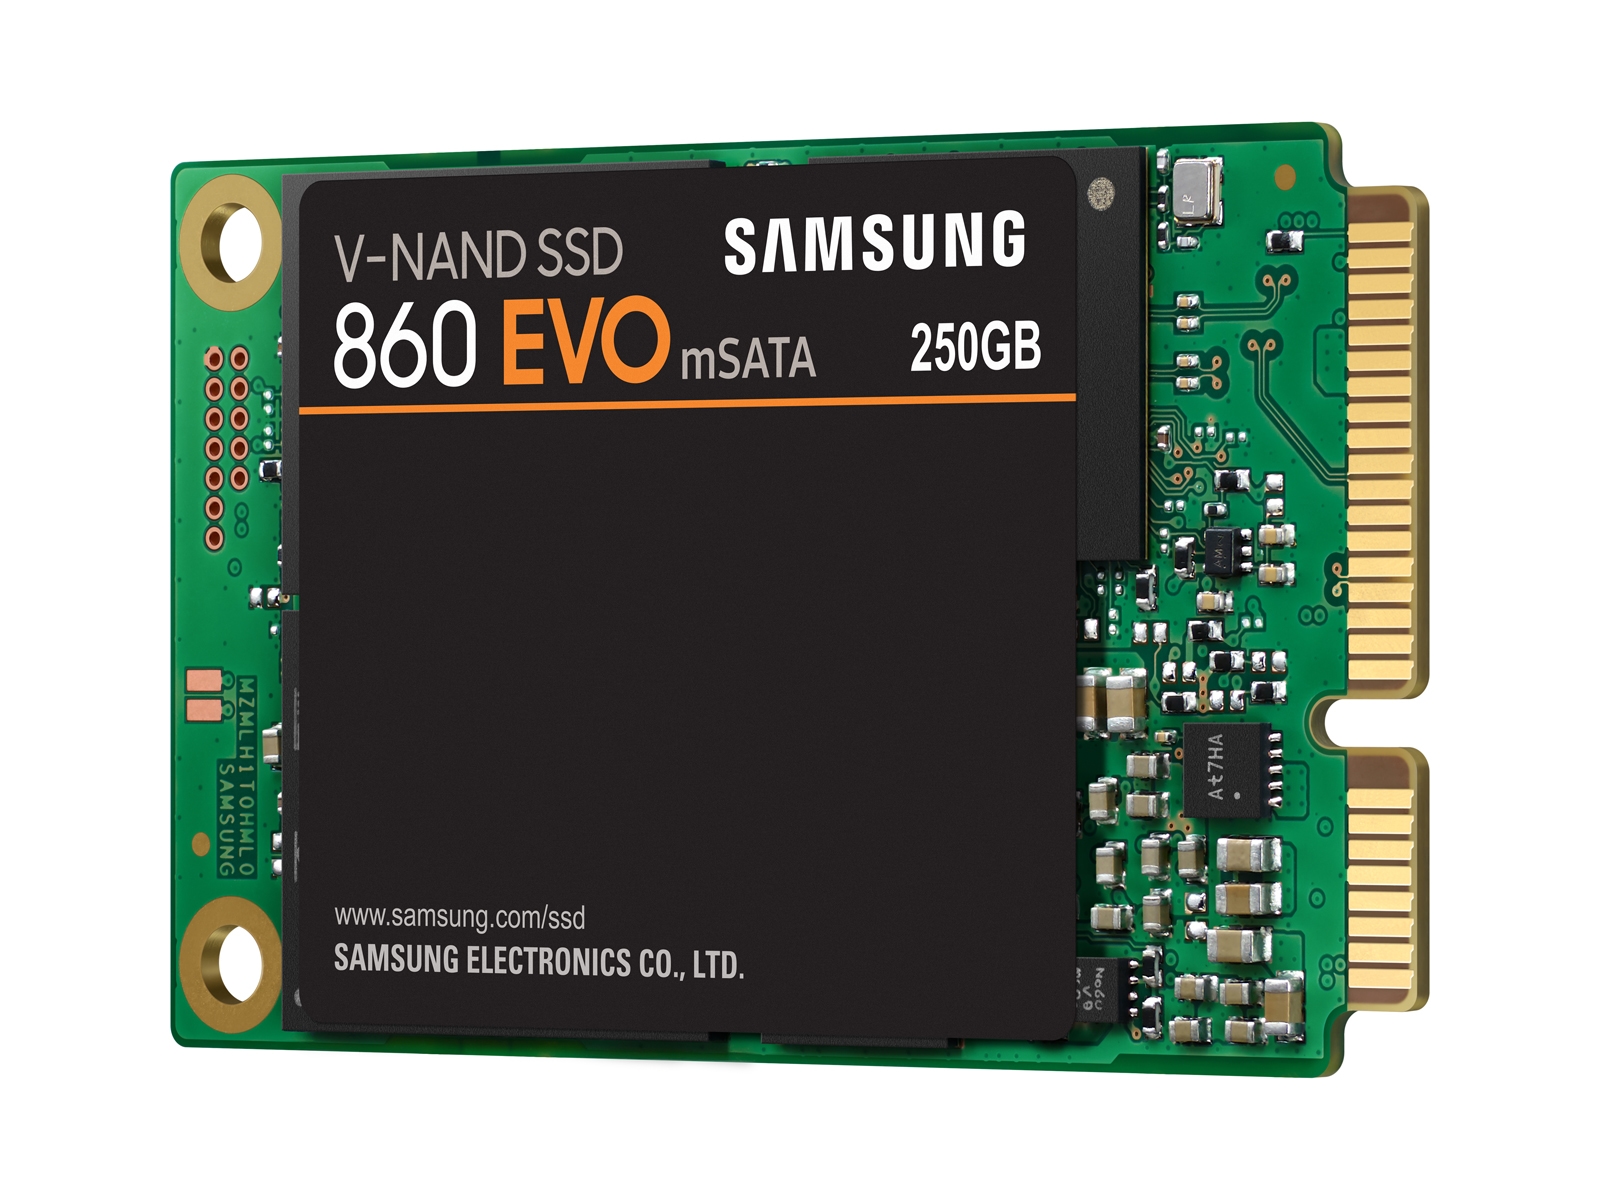 Samsung Nand Ssd 860 Evo 500gb